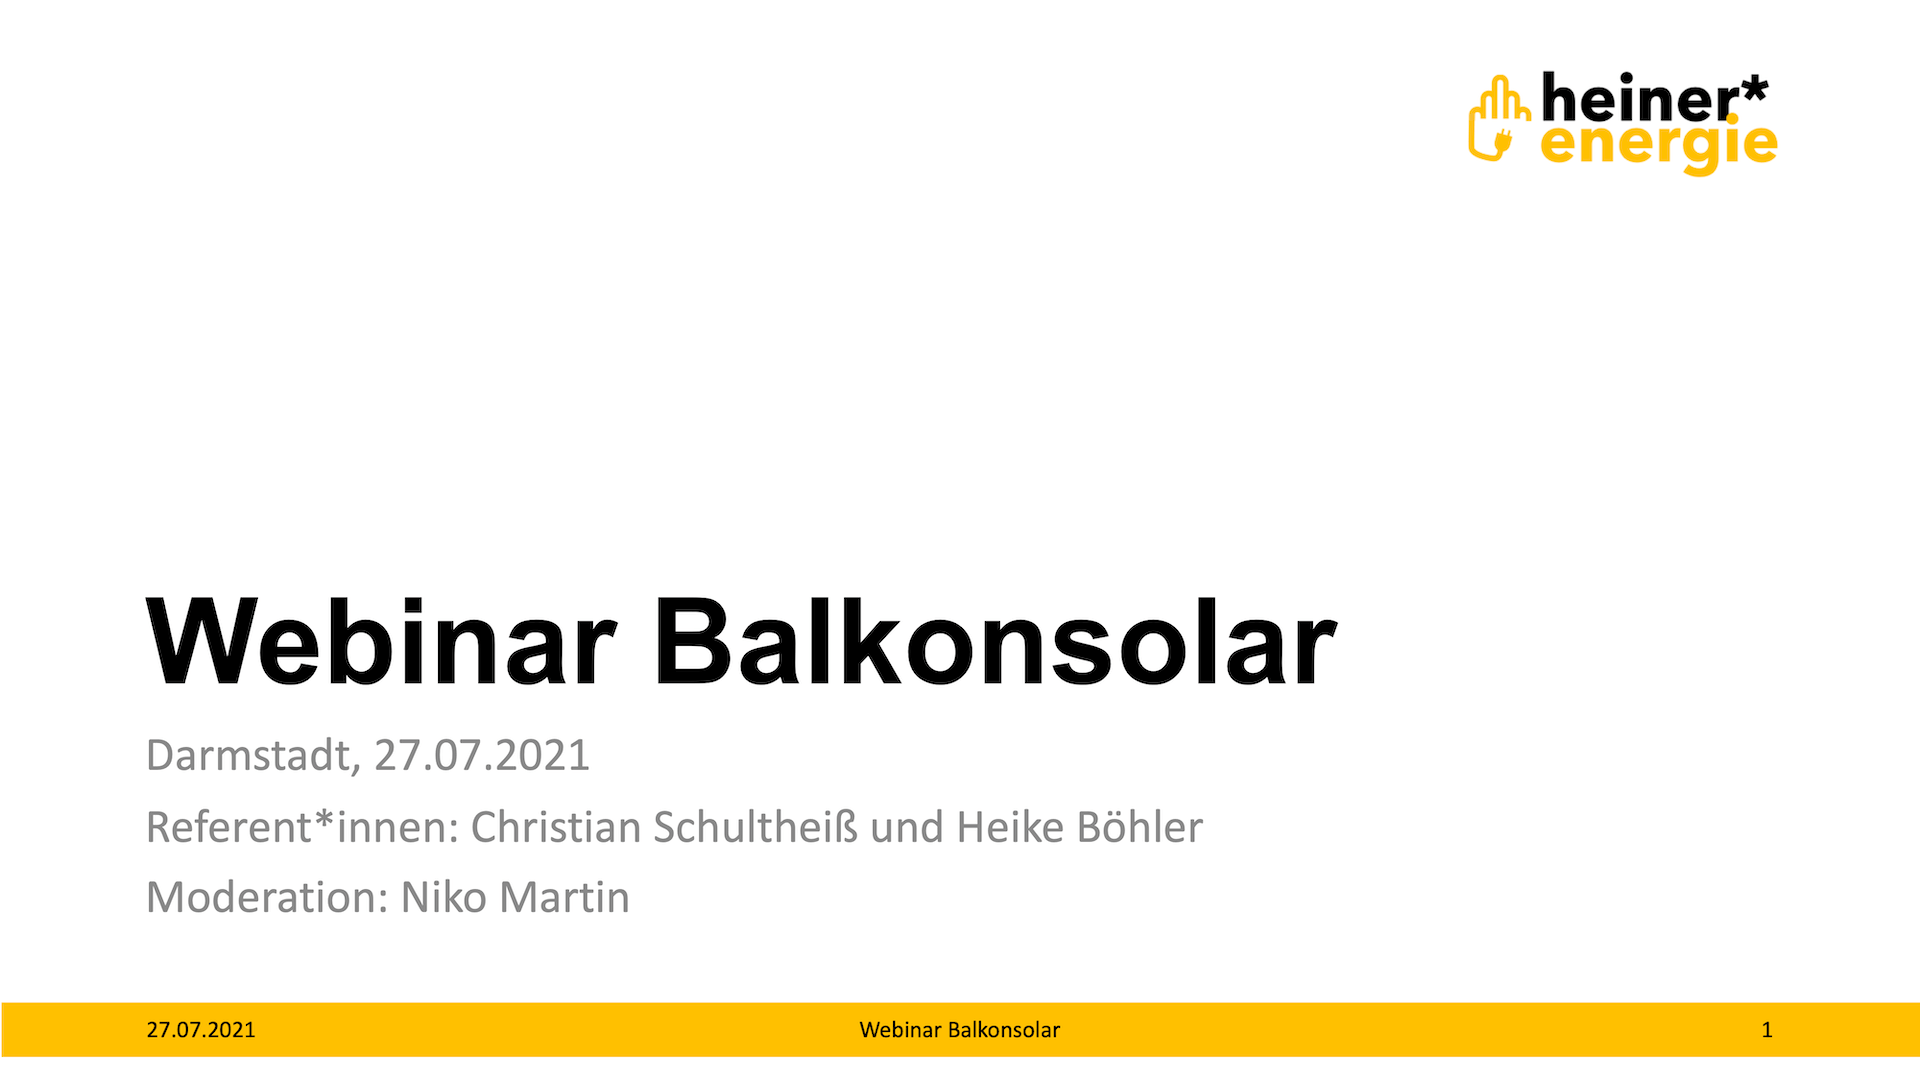 Online seminar: Solar power from the balcony in Darmstadt